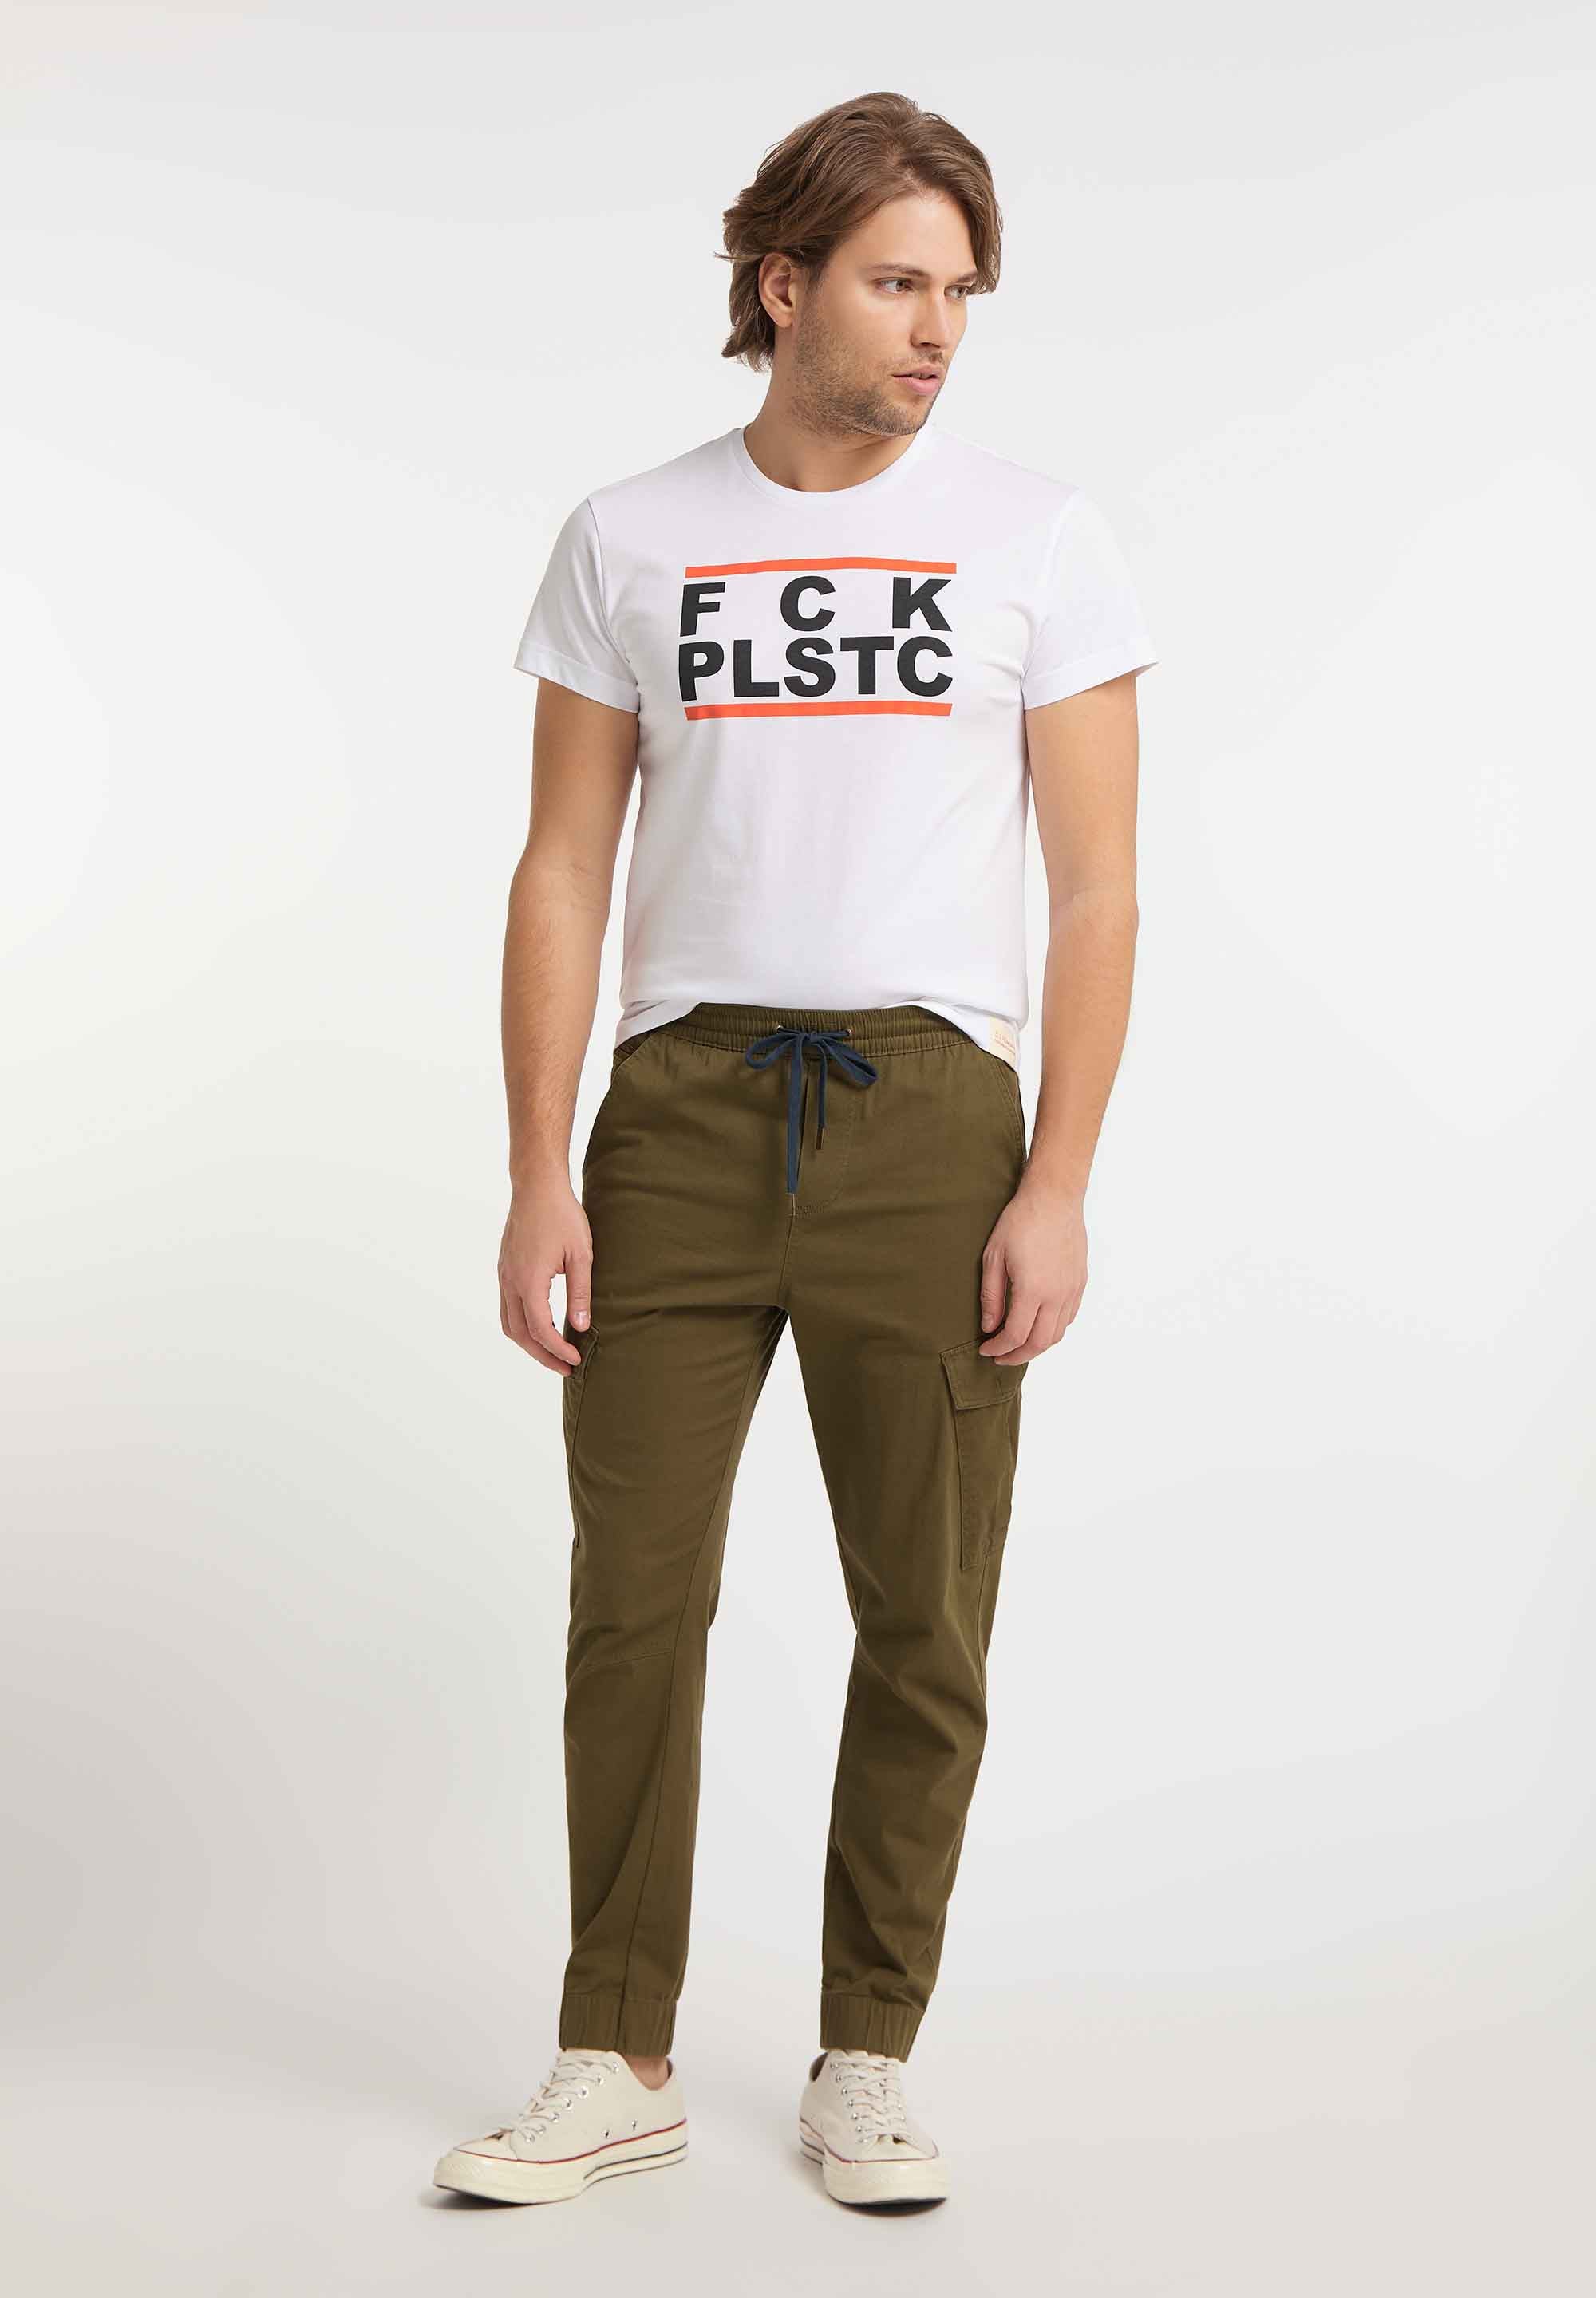 SOMWR FCK PLST T-Shirt WHT002